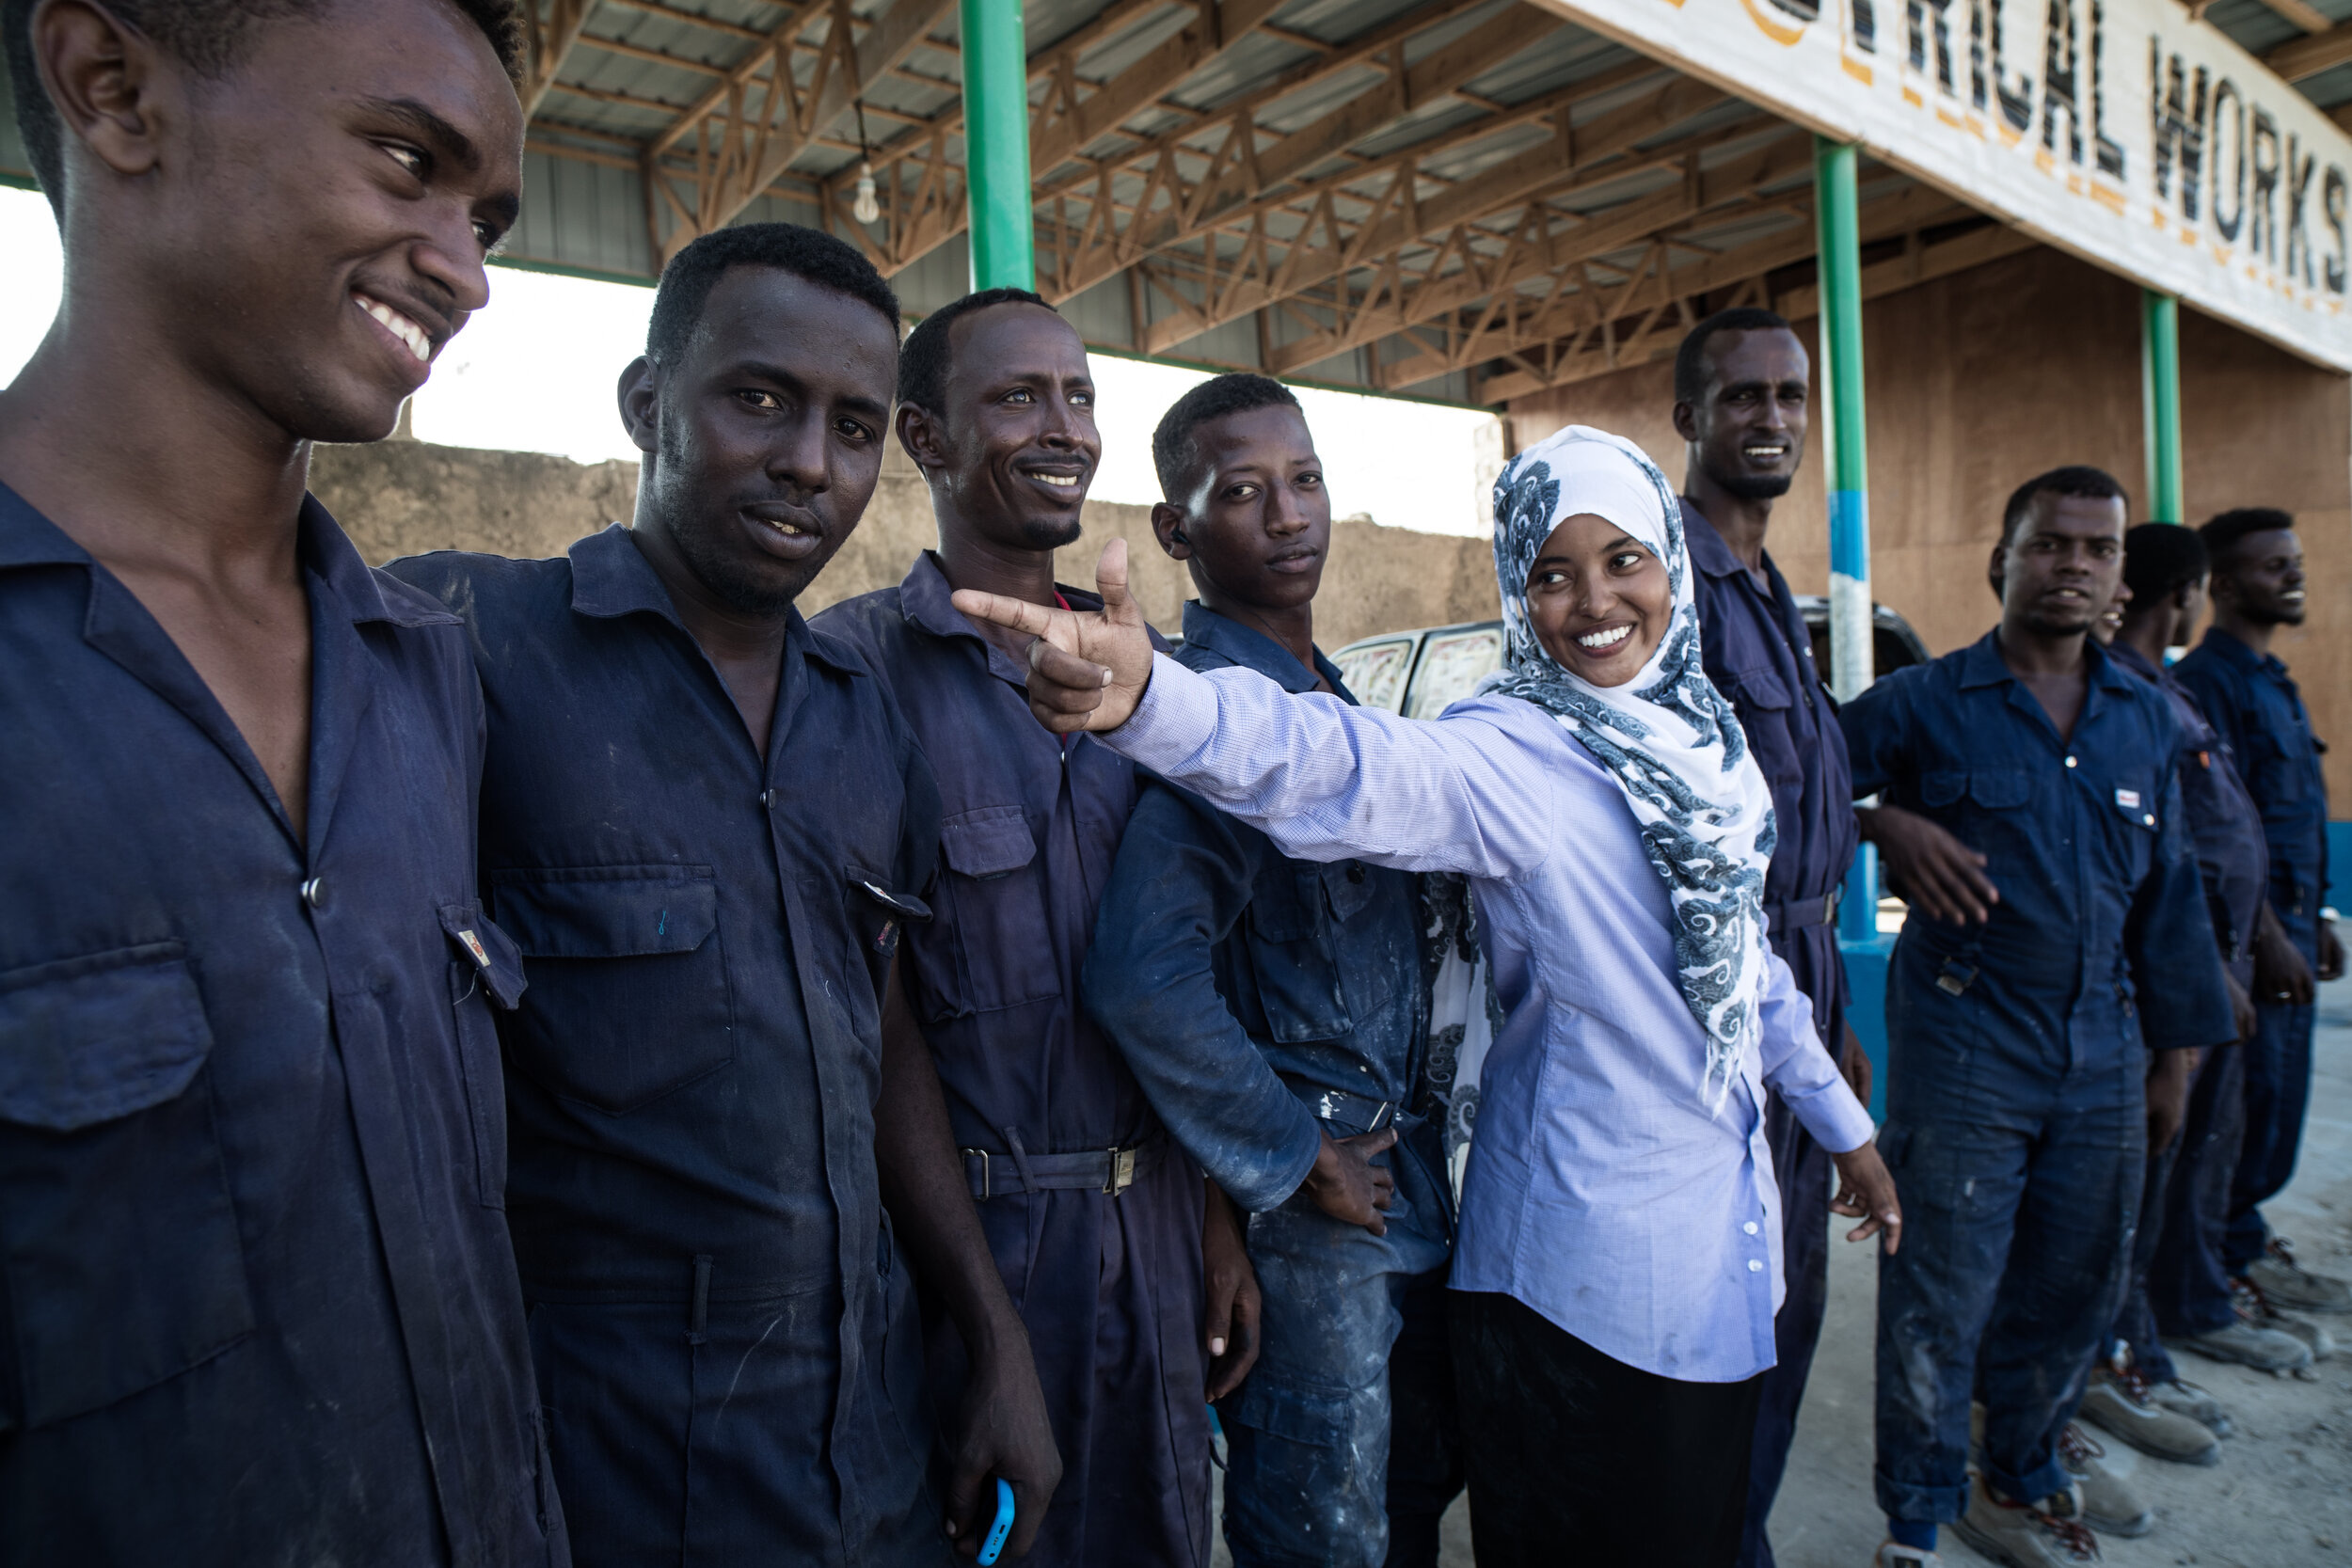  18 years old Nasra Haji Hussein Ibrahim, Somalia’s first woman mechanic, posing with the team of mechanics. Mogadishu, 2017 